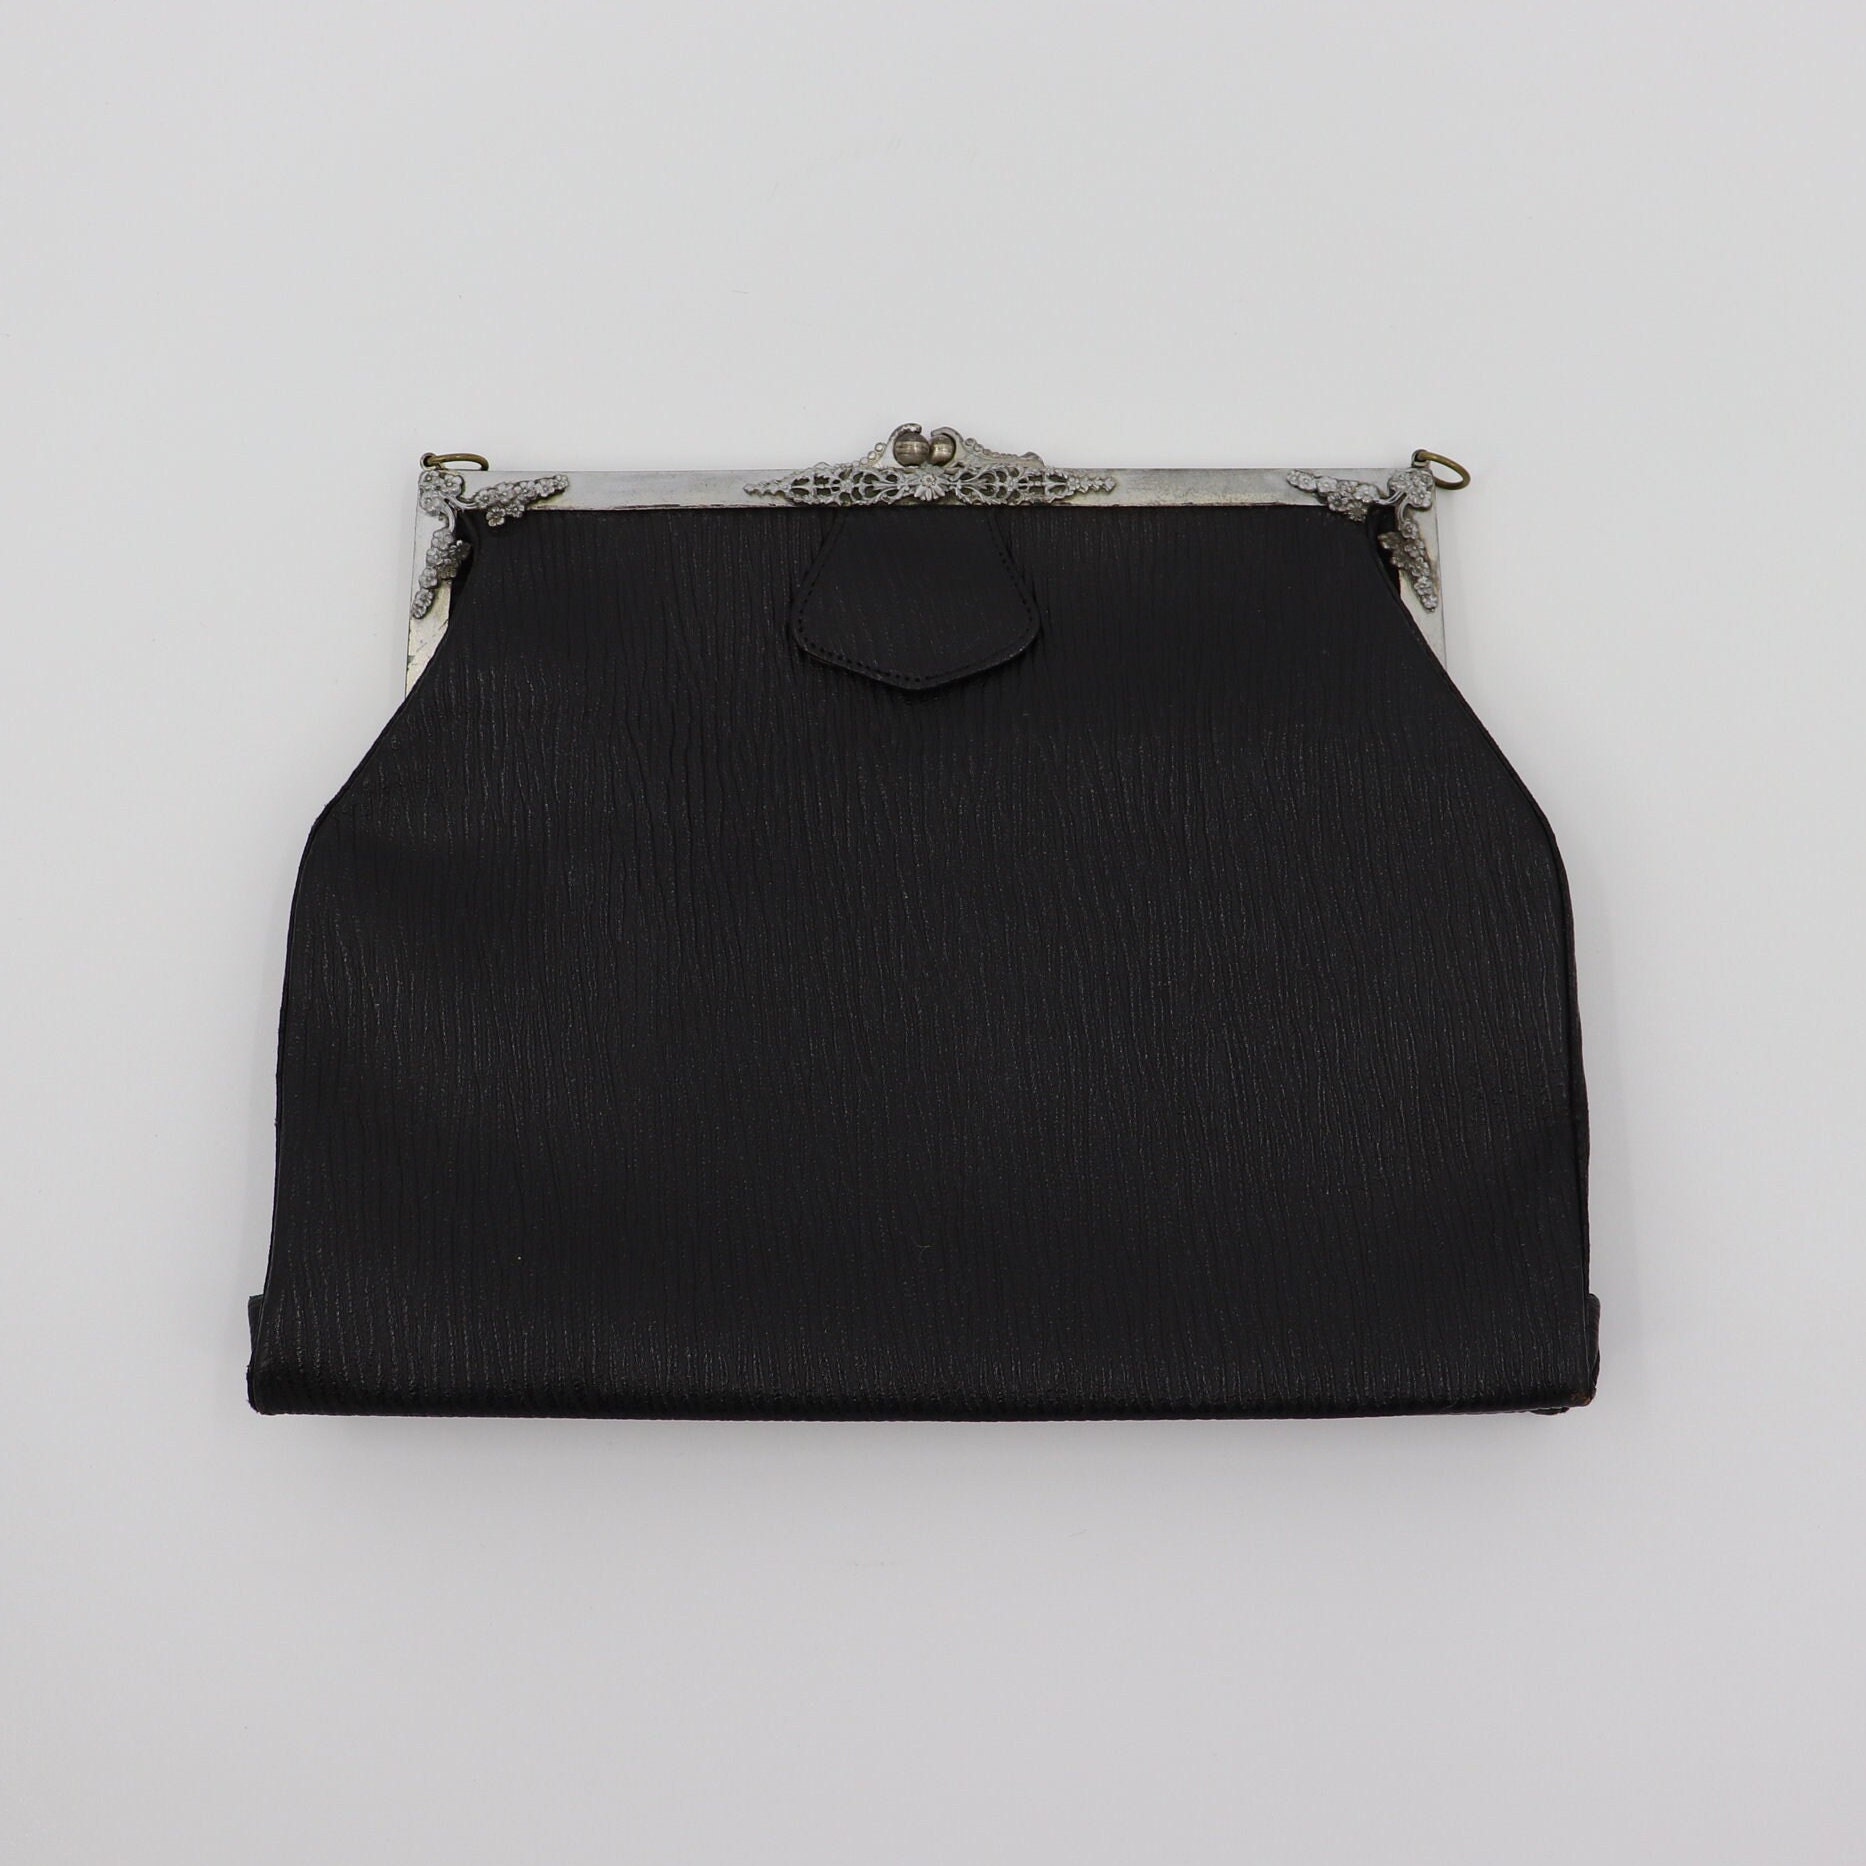 Evening bag, Sequins & silver-tone metal, black & silver — Fashion